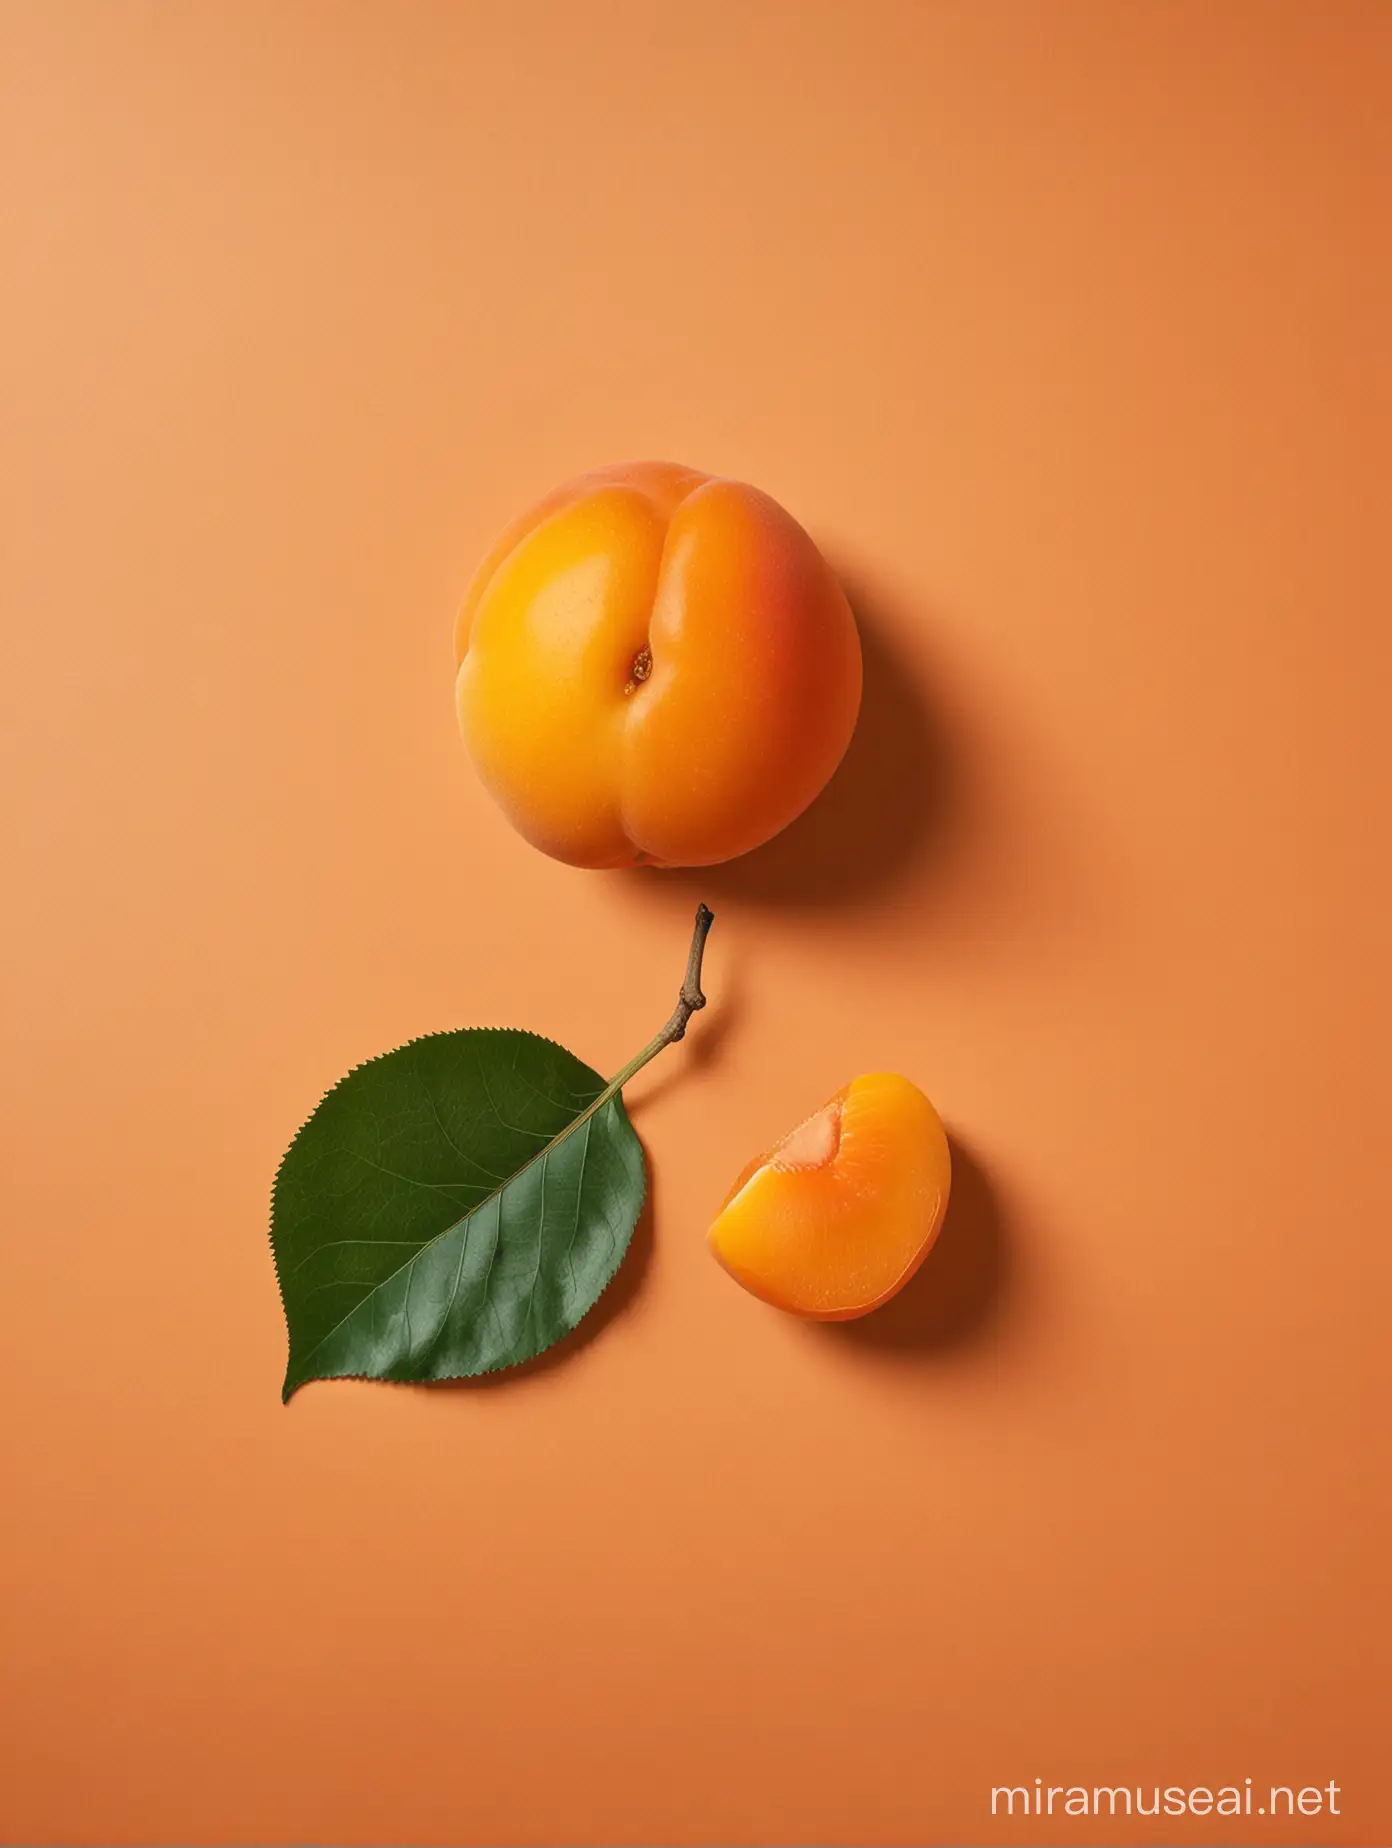 Vibrant Apricot with Leaf on Orange Background